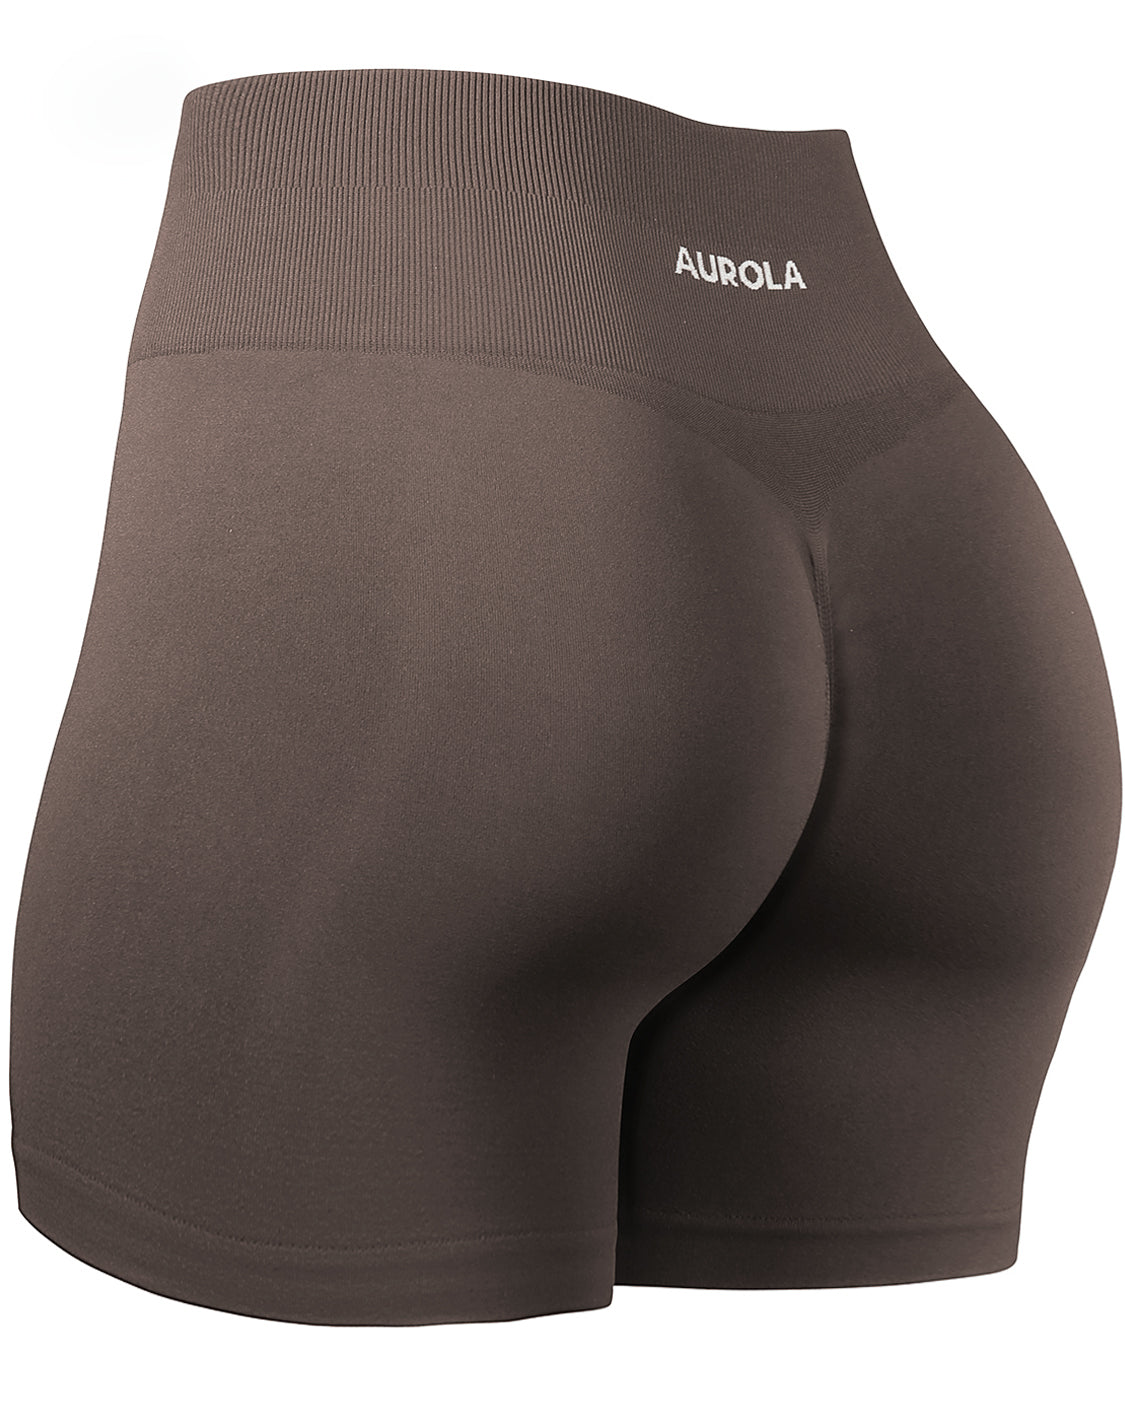 AUROLA Dream Collection Workout Shorts for Women High Waist Seamless  Scrunch Athletic Running Gym Yoga Active Shorts Black, Asphalt Grey,  X-Small